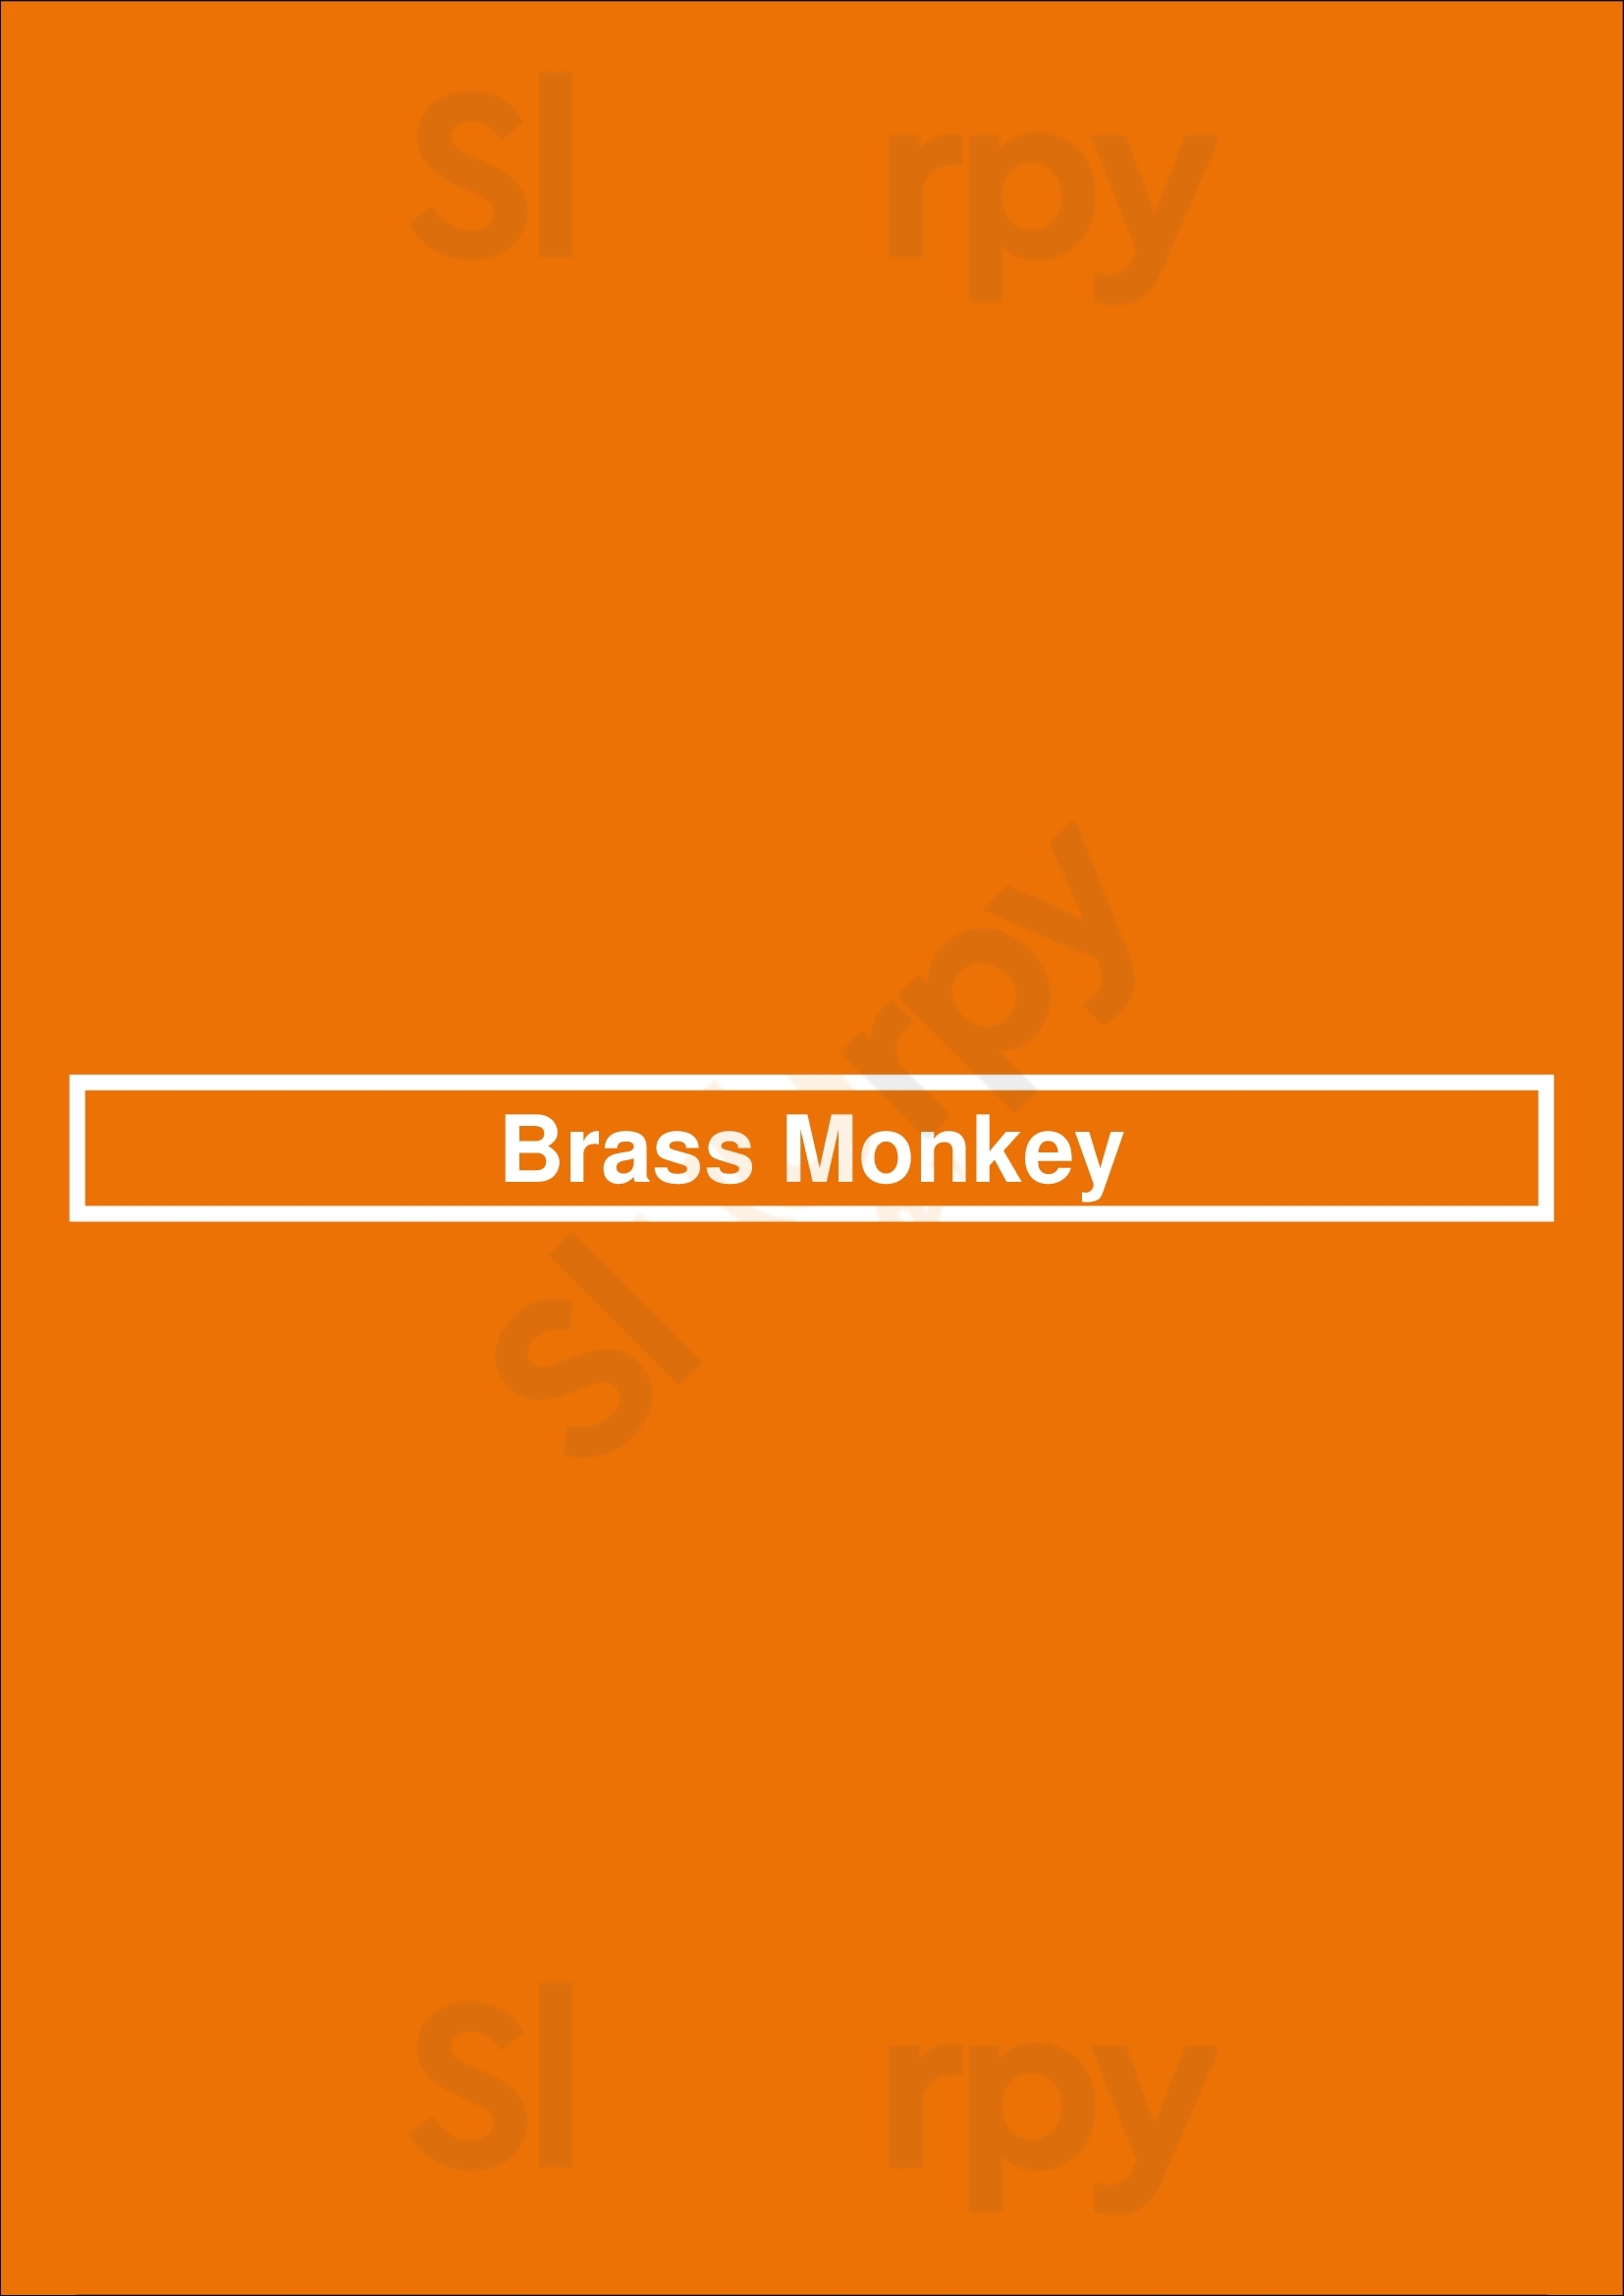 Brass Monkey Sint-Niklaas Menu - 1